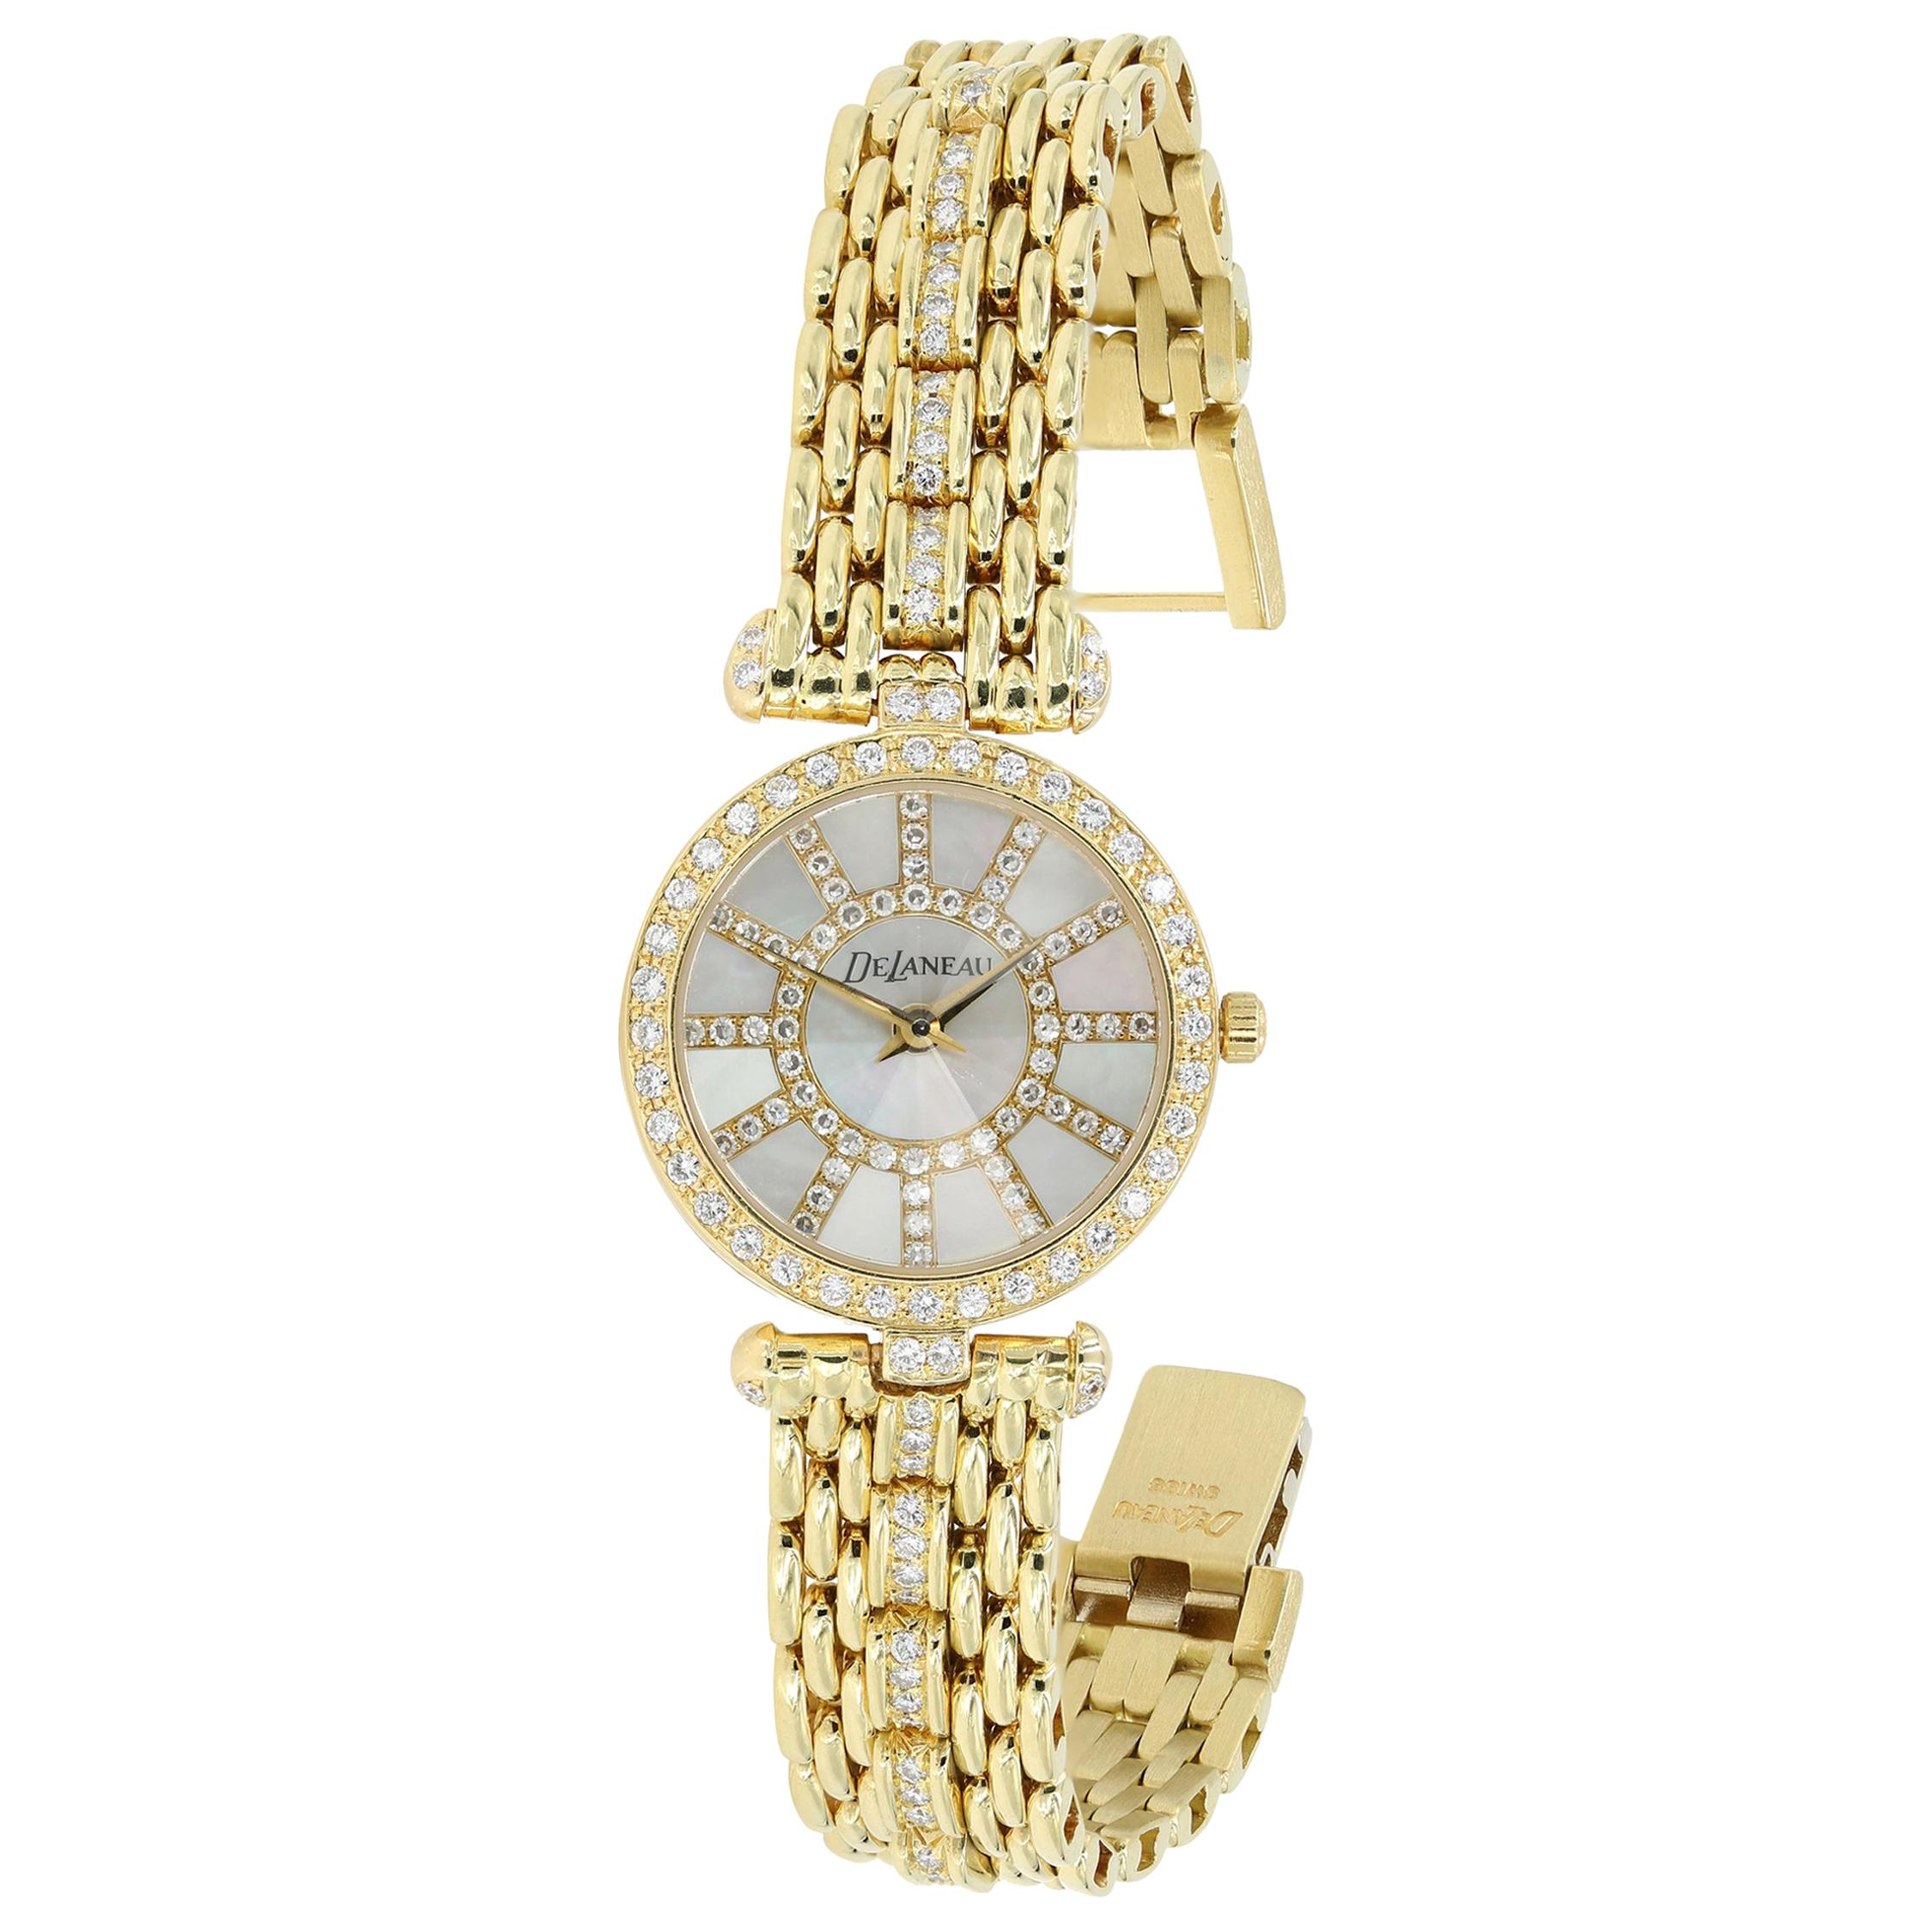 DeLaneau 18 Karat Gold & Diamond Bracelet Watch with Faceted Crystal & MOP Dial